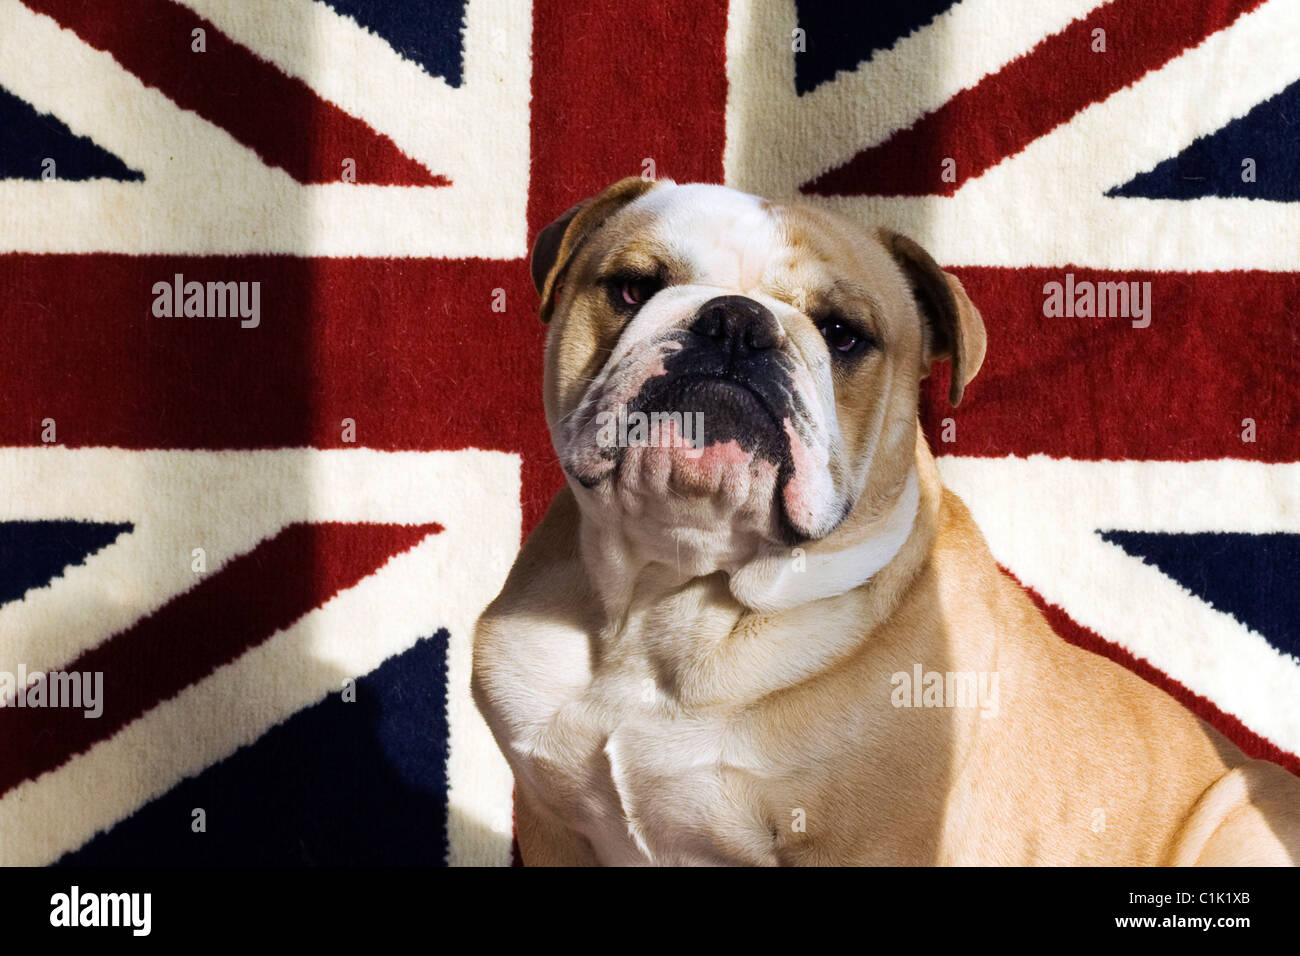 A British Bulldog Sat on a Union Jack Rug Stock Photo